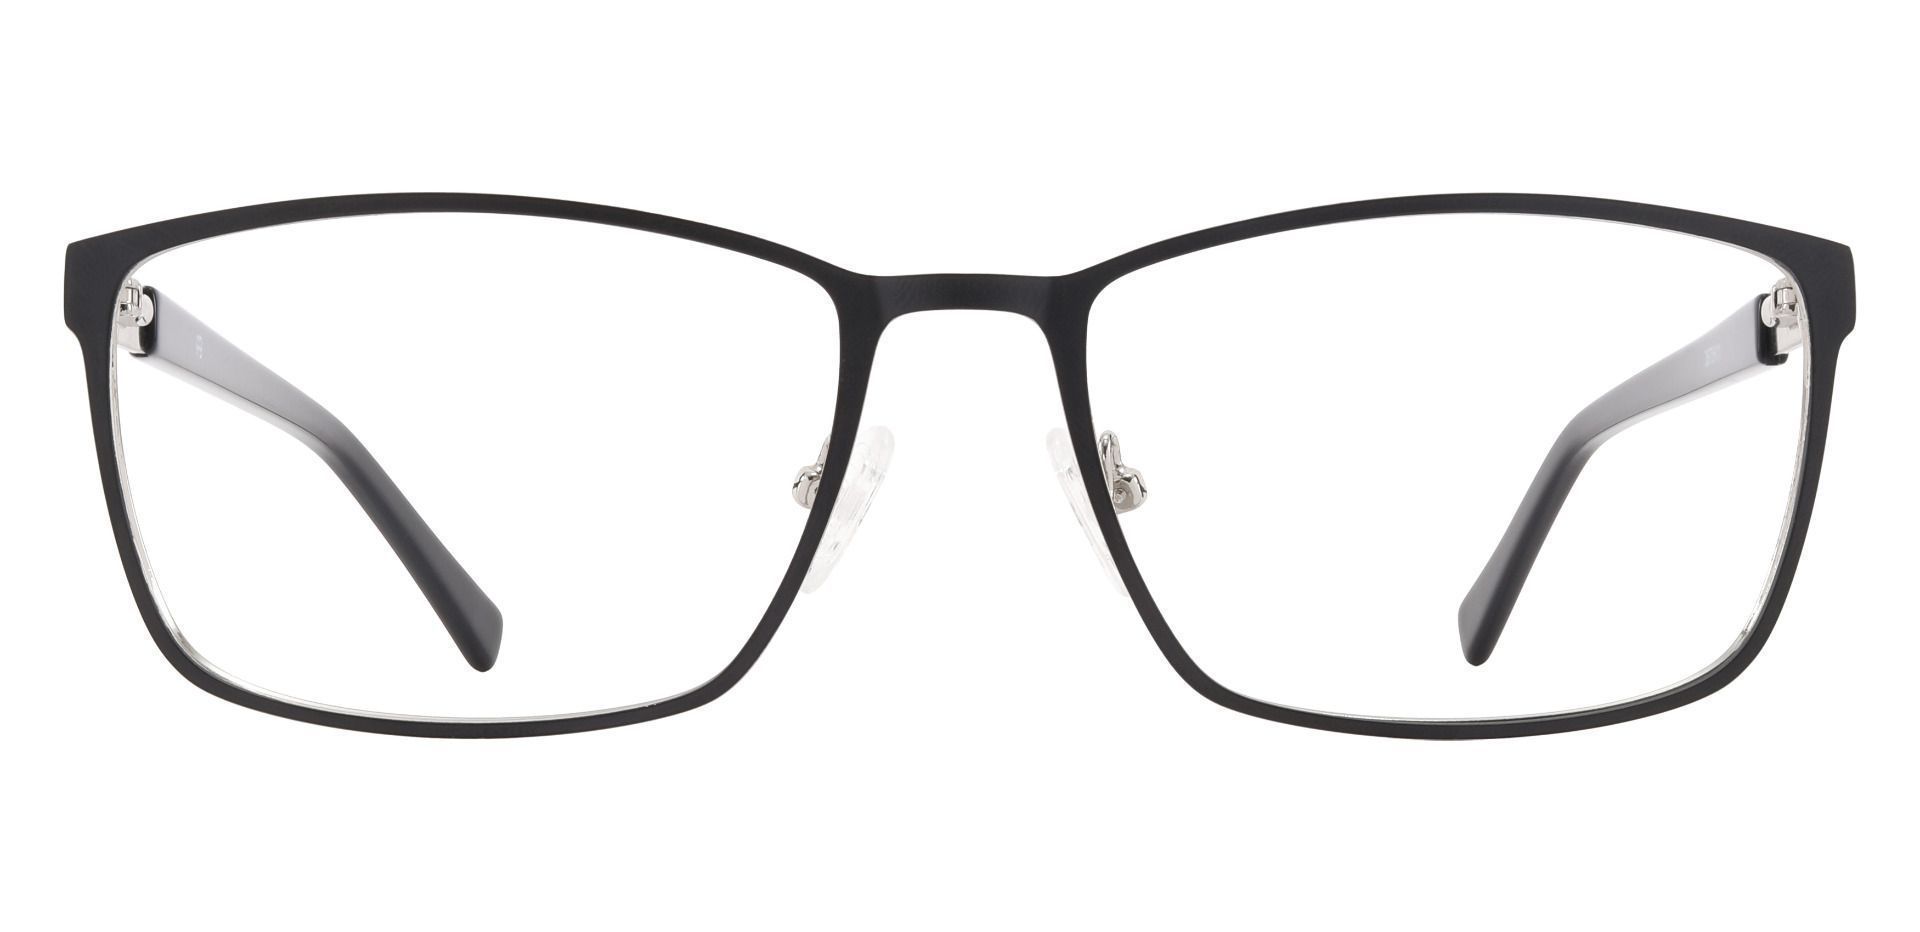 Cornell Rectangle Lined Bifocal Glasses - Black